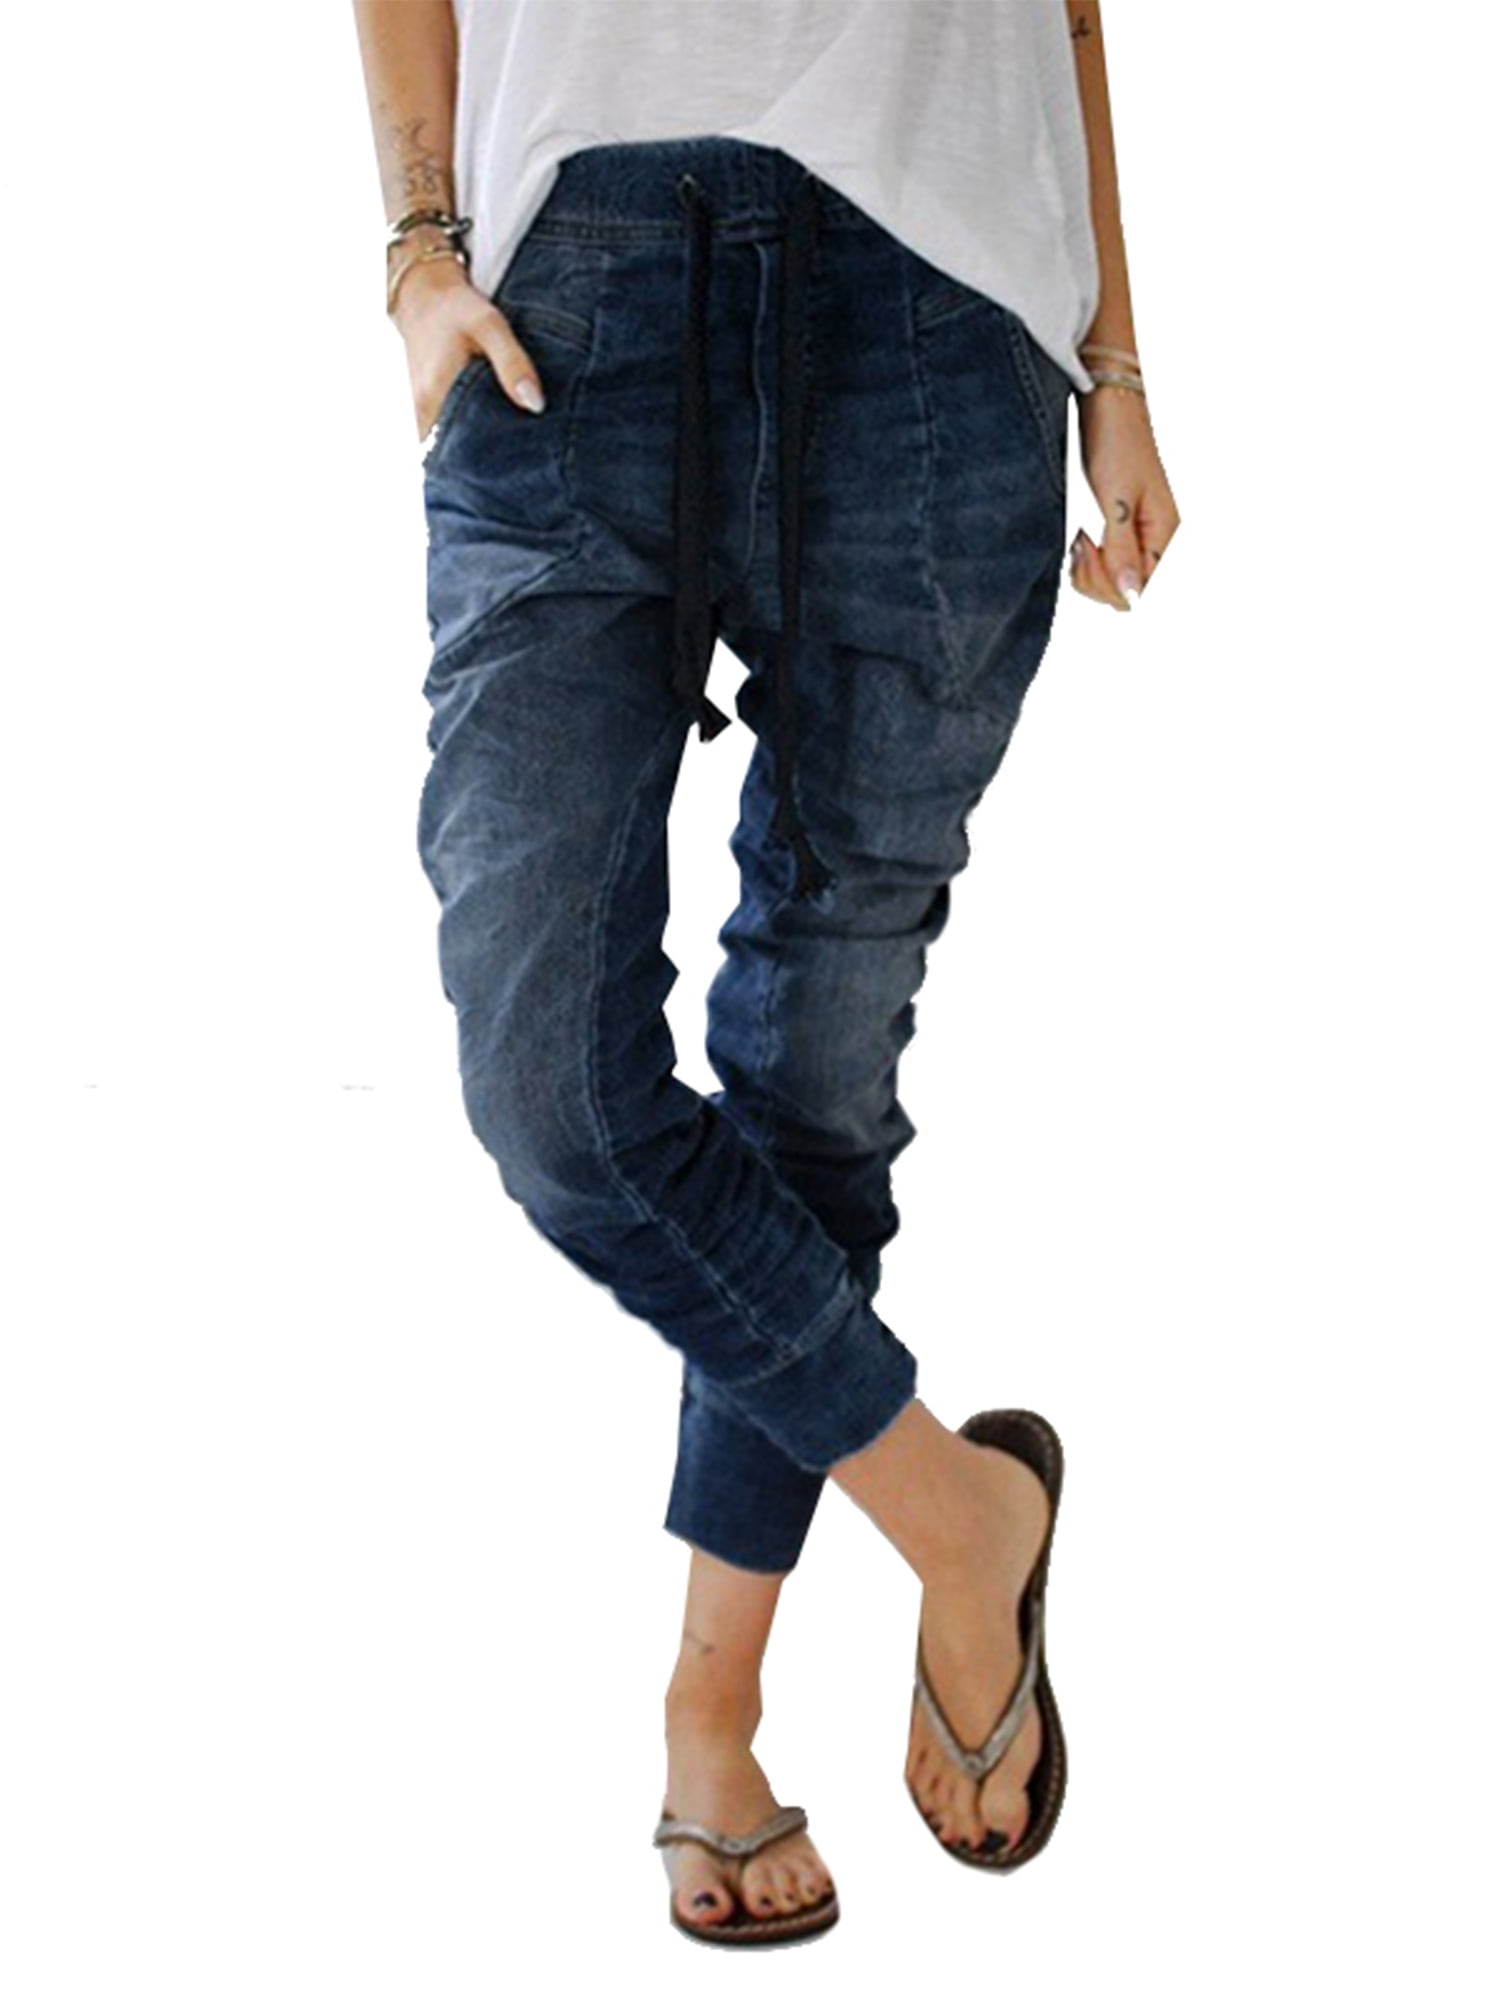 walmart elastic waist jeans